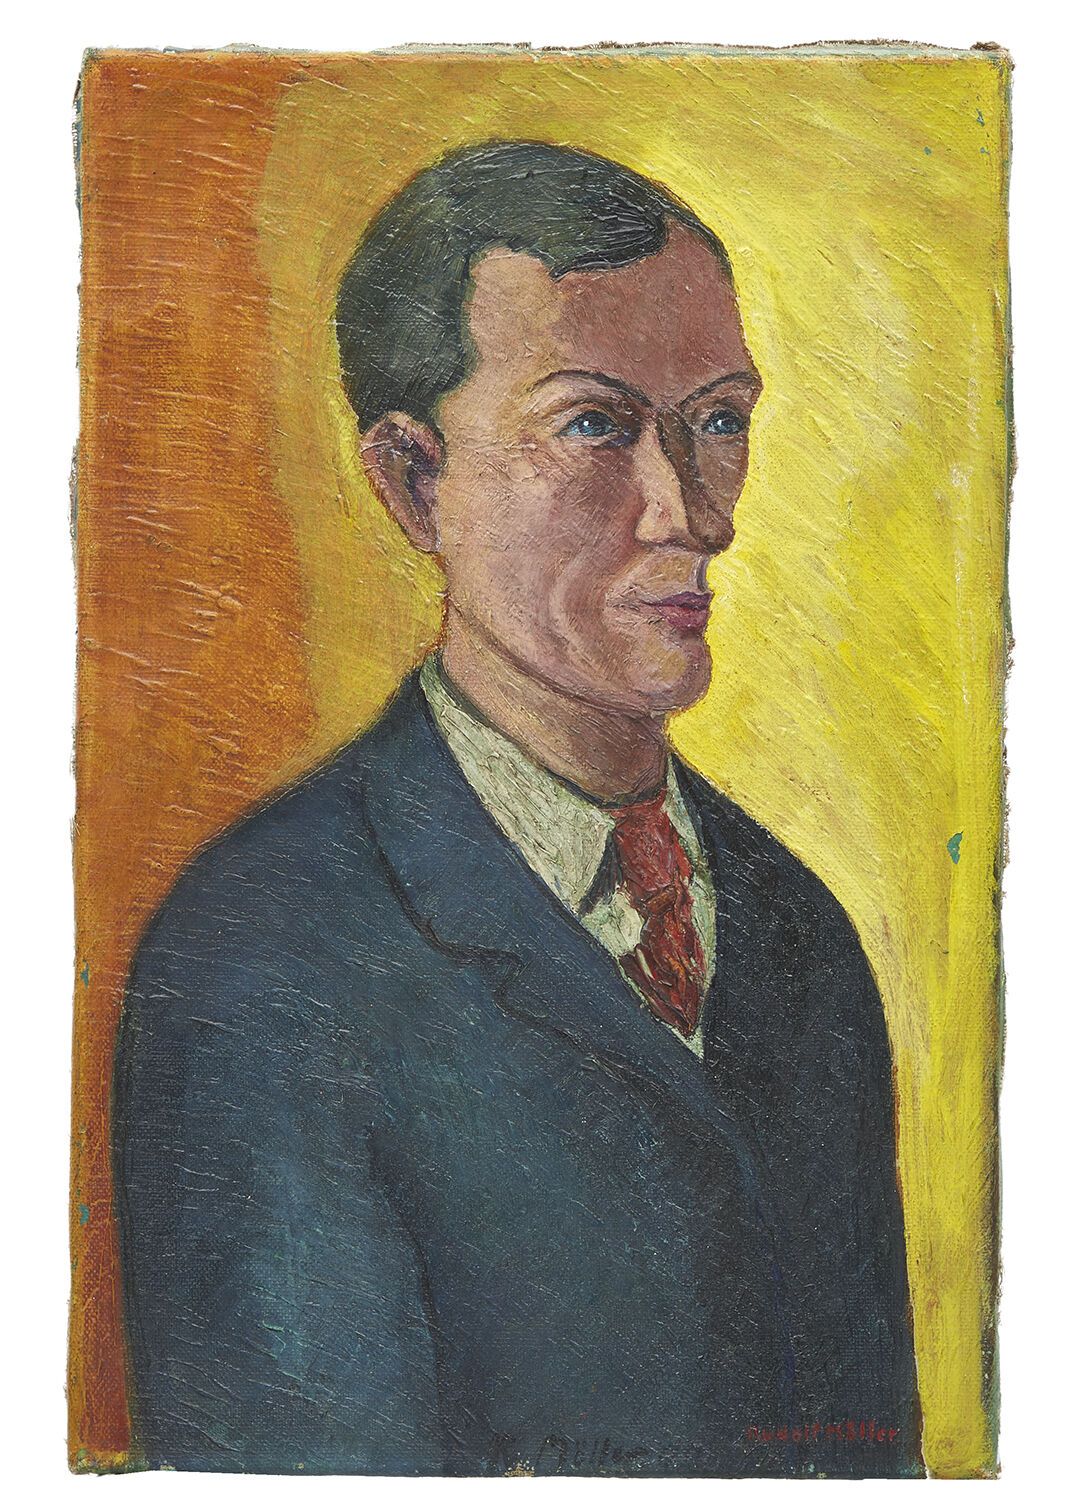 RUDOLF MÖLLER RUDOLF MÖLLER (1881-1967)
Portrait
Huile sur toile, signée en bas &hellip;